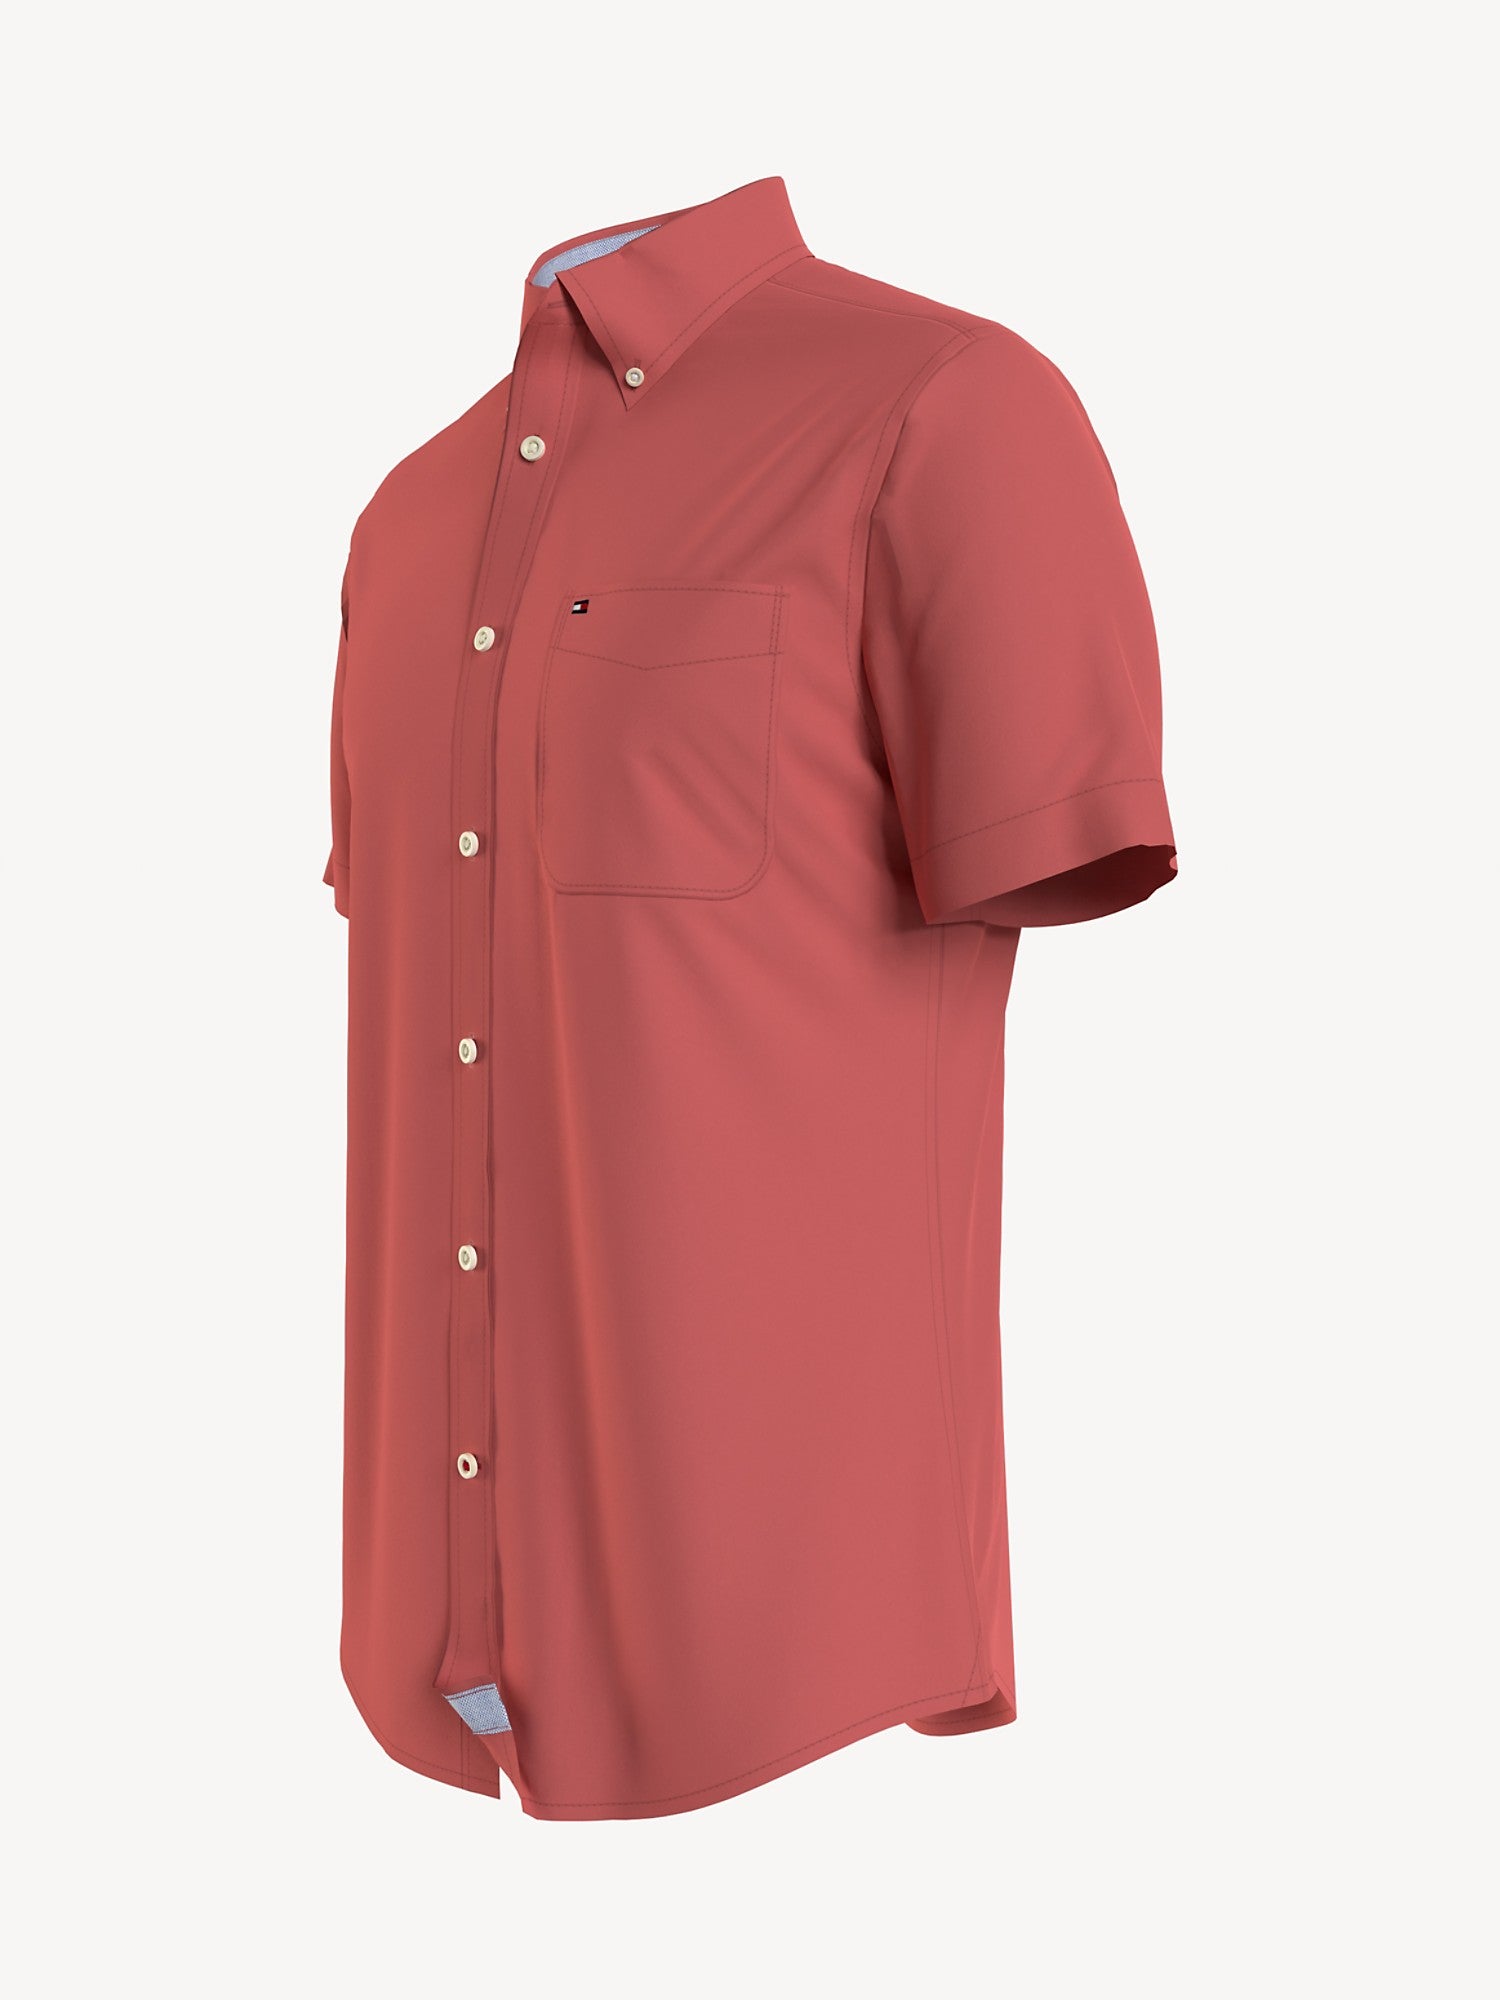 Tommy Hilfiger Men's Wainwright Solid Short Sleeve Custom Fit Shirt Orange Zing 78J1737 660.